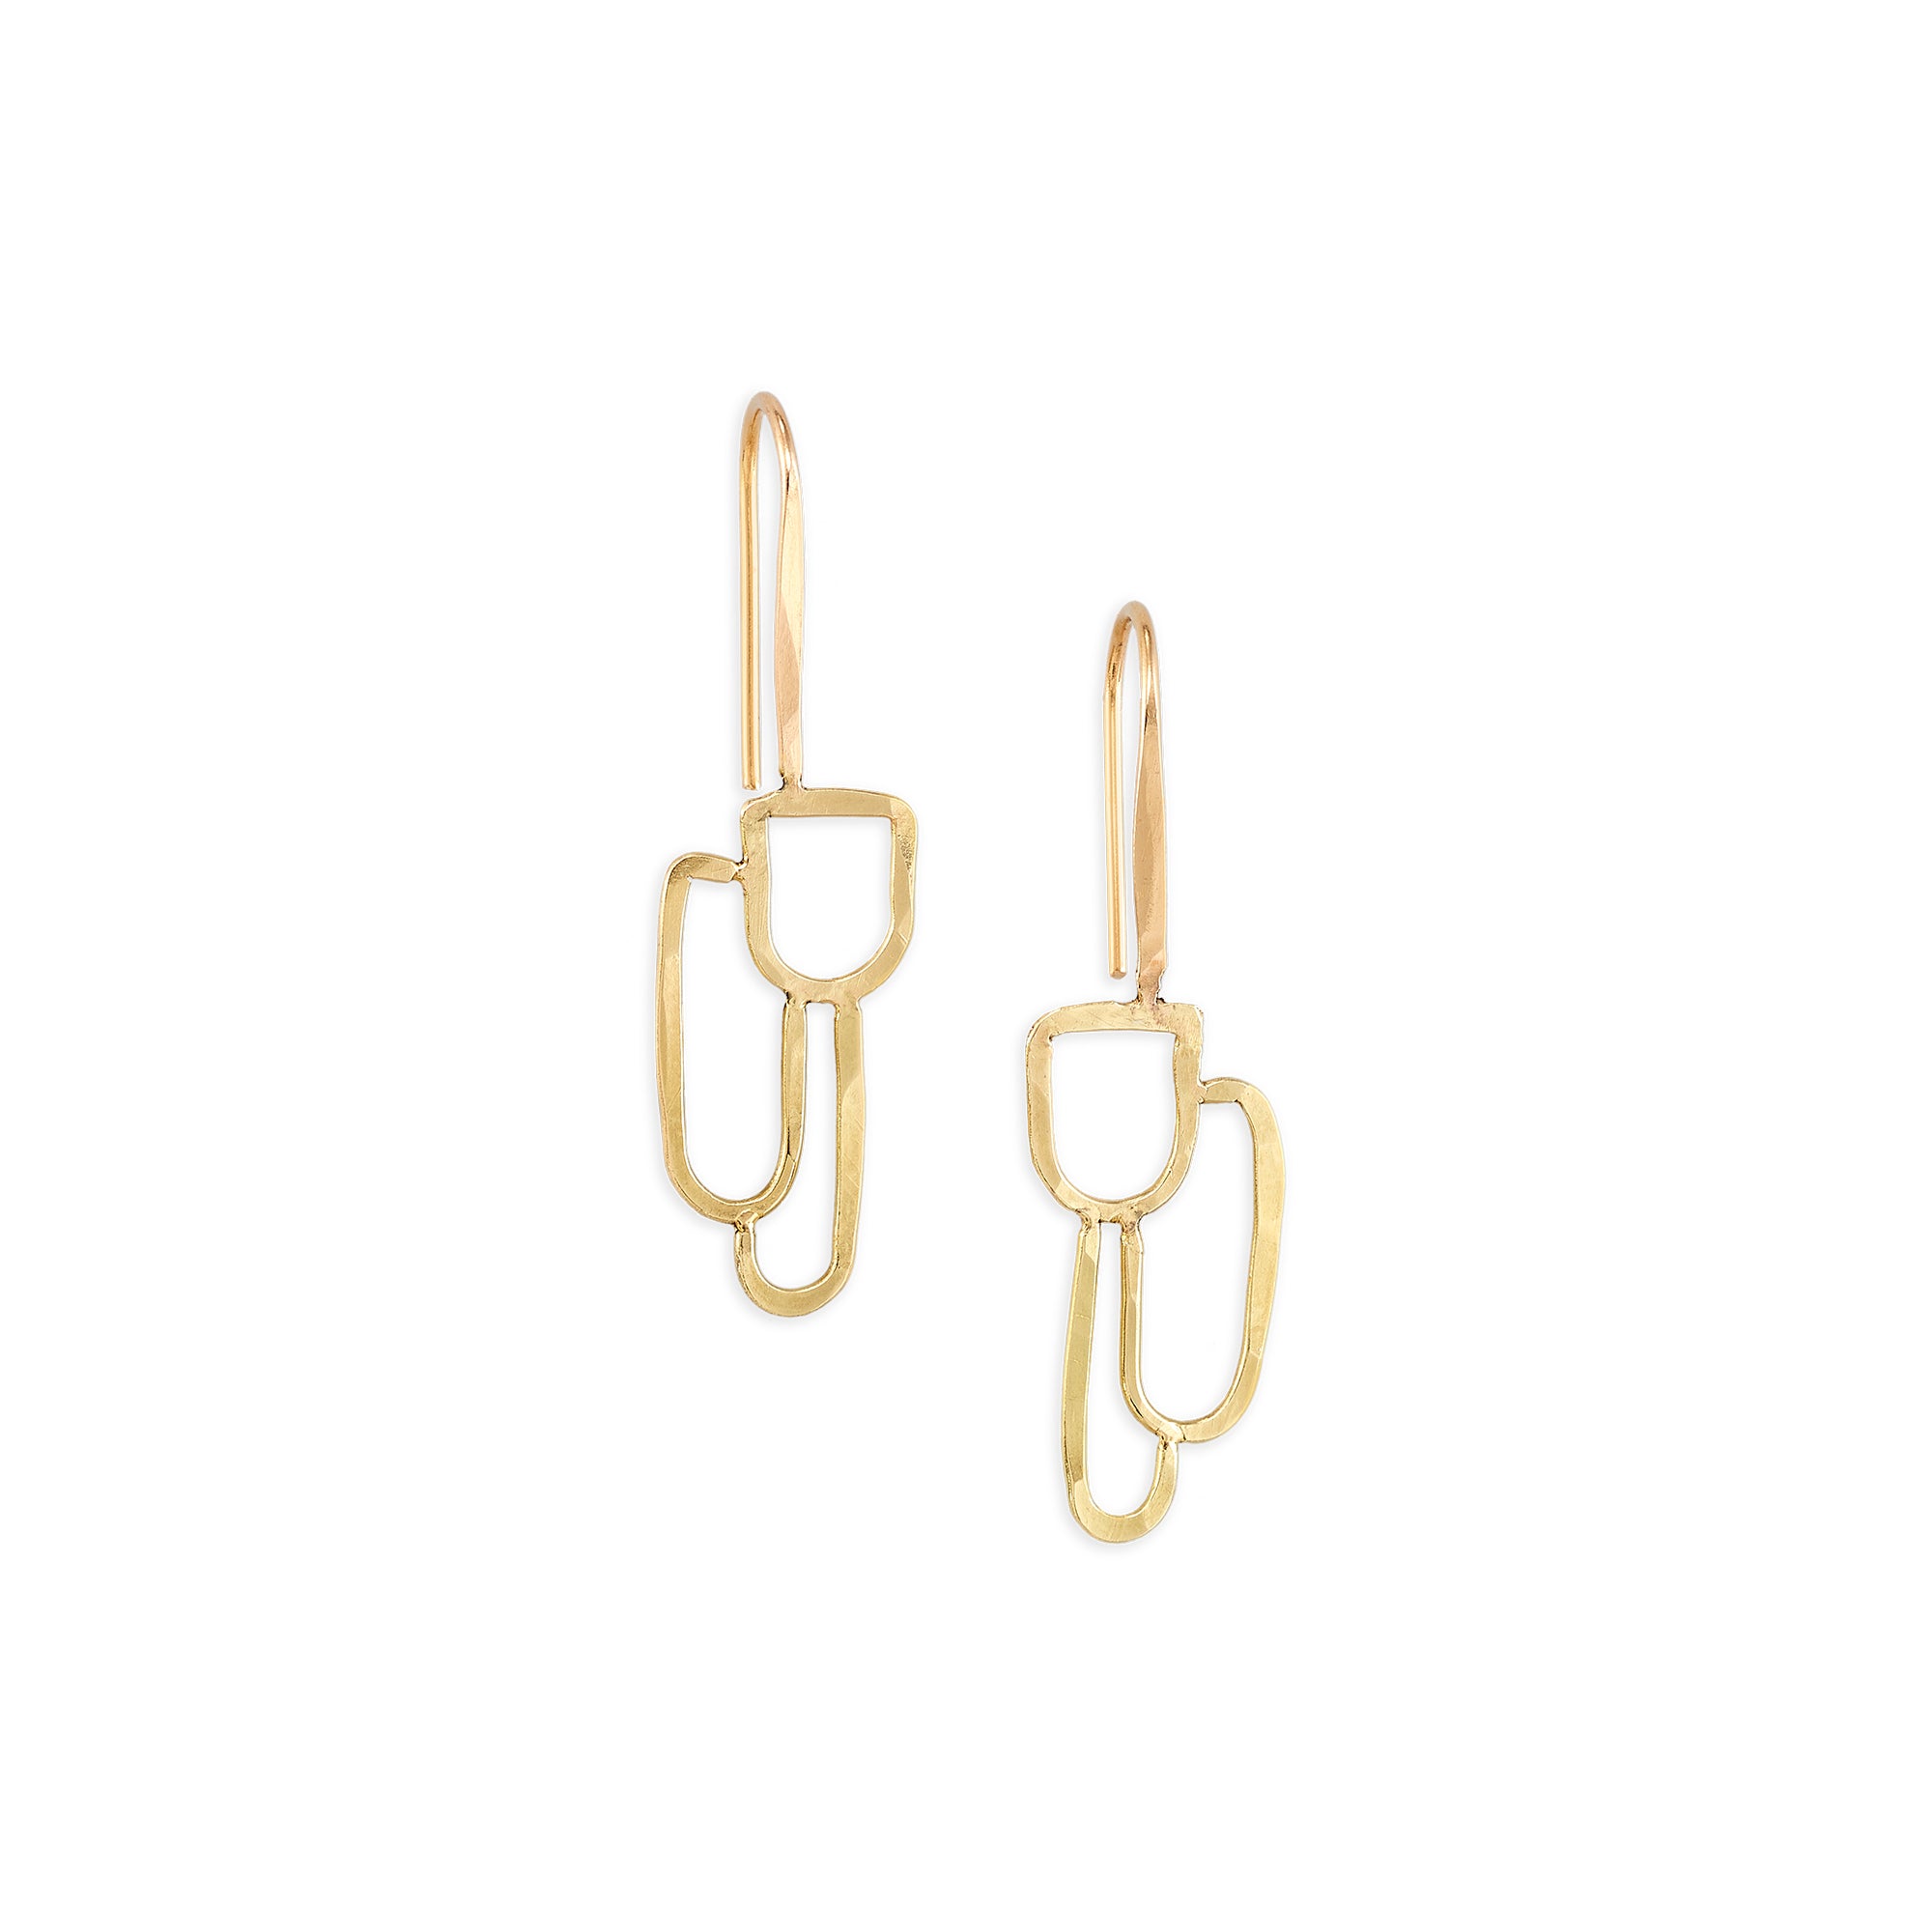 Callen Thompson | Five Borough Multiverse, collaboration earrings in 14k gold